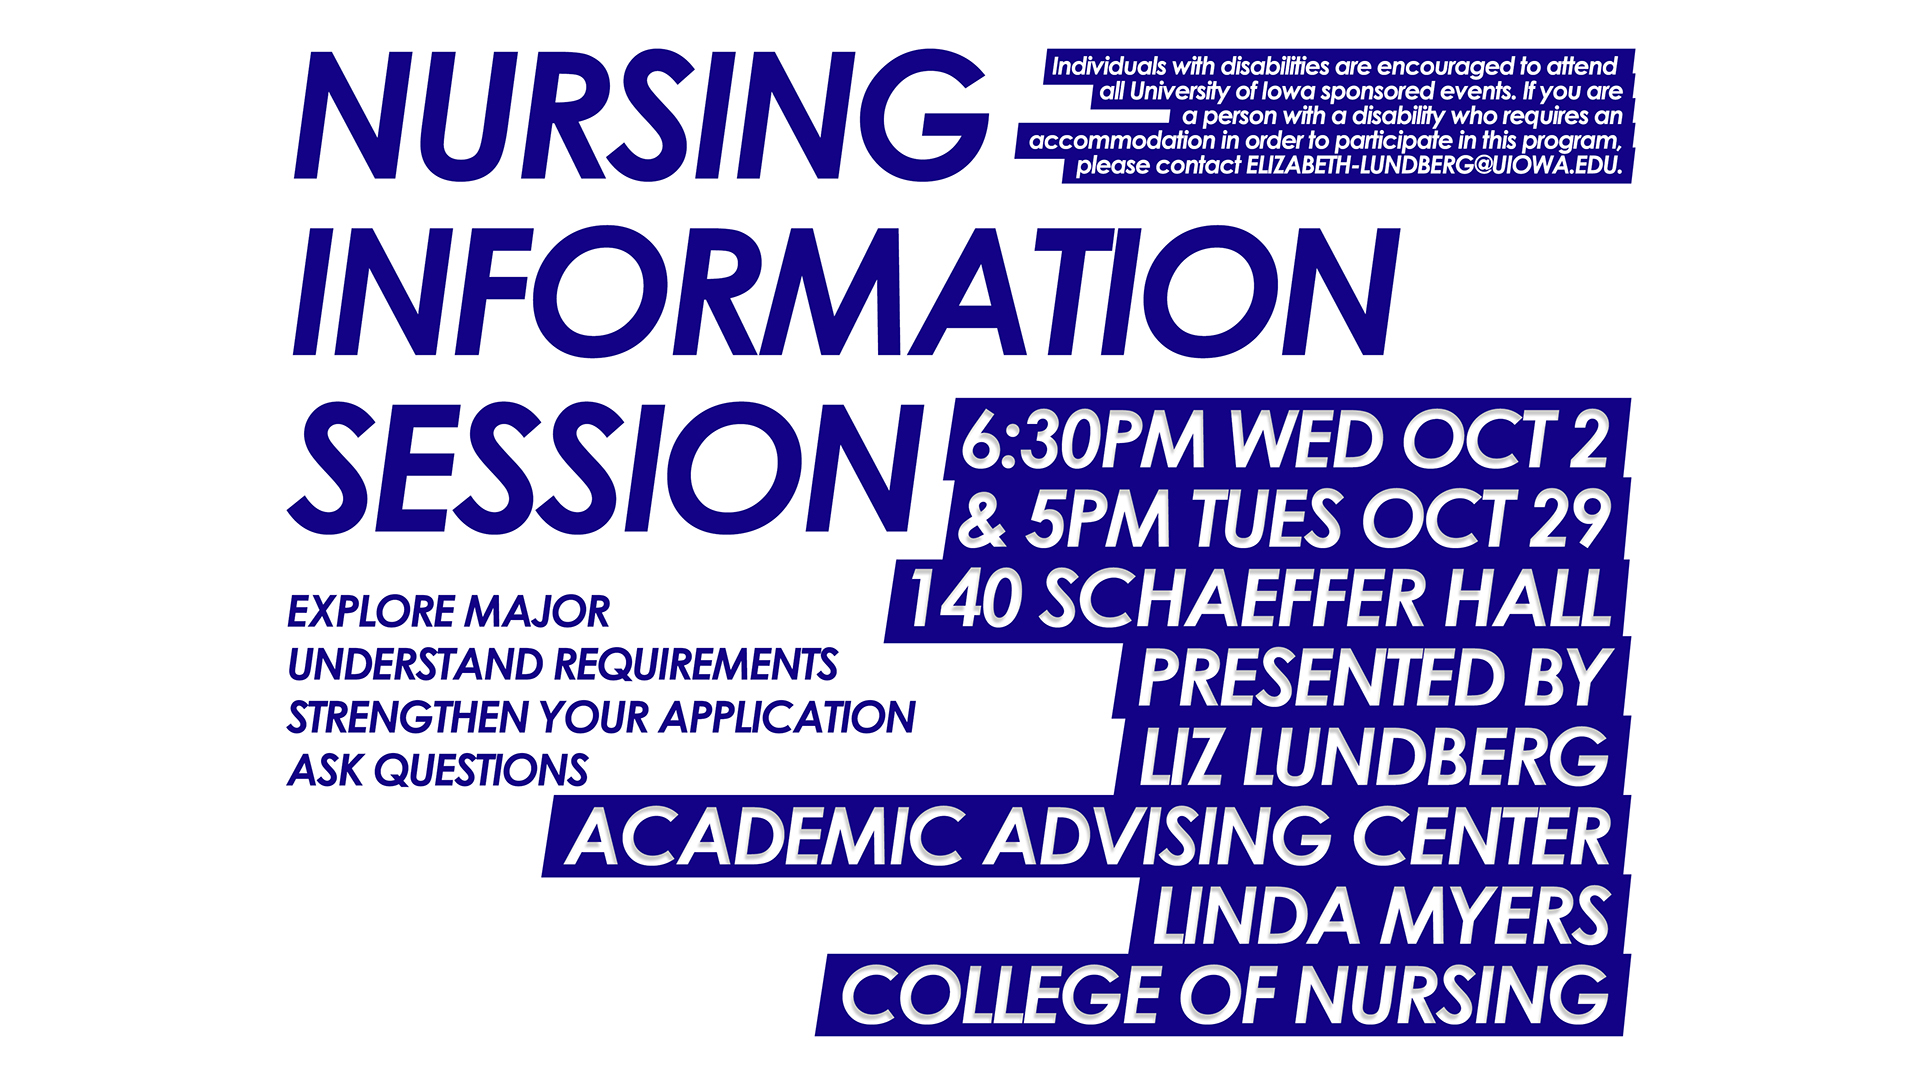 Nursing Information Session